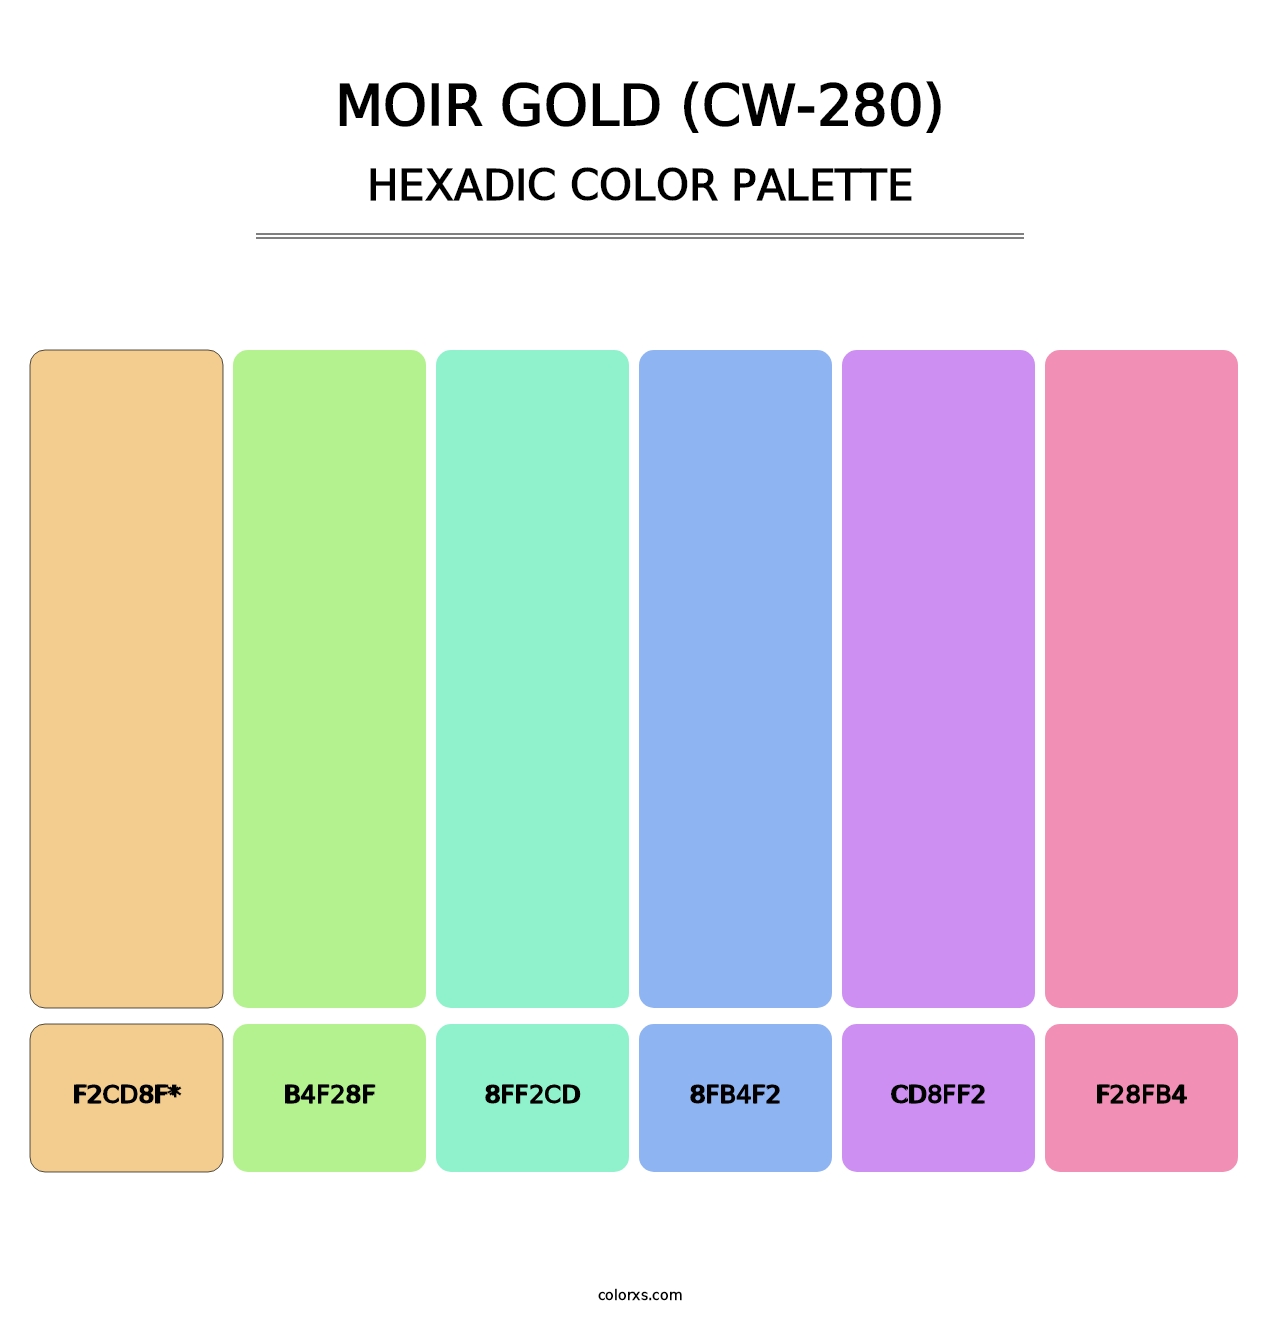 Moir Gold (CW-280) - Hexadic Color Palette